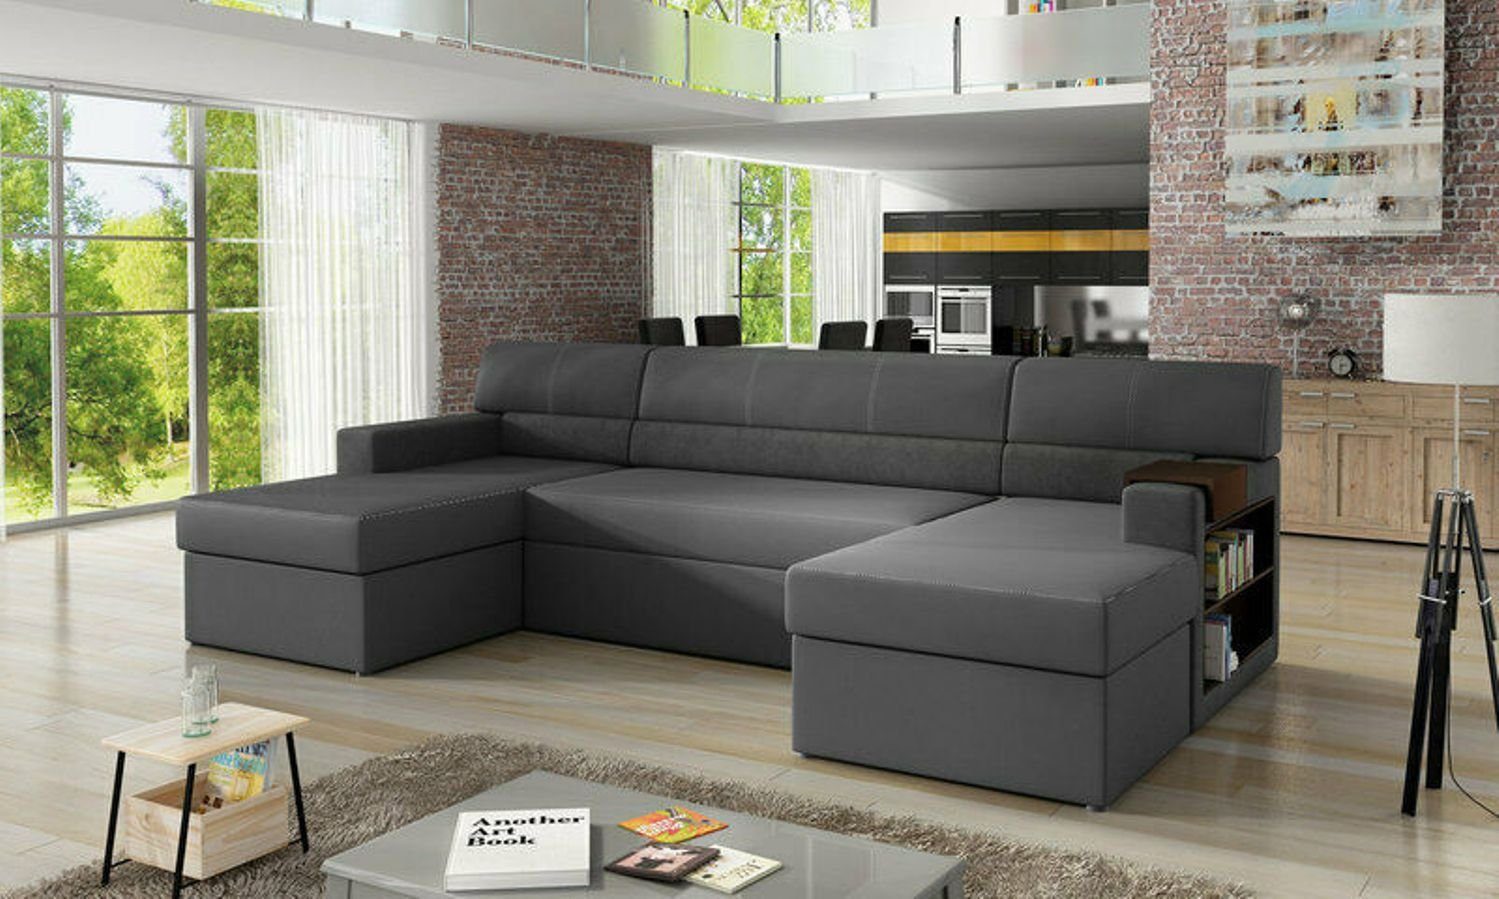 JVmoebel Ecksofa, Design Ecksofa Markos U-form Bettfunktion Couch Dunkelgrau